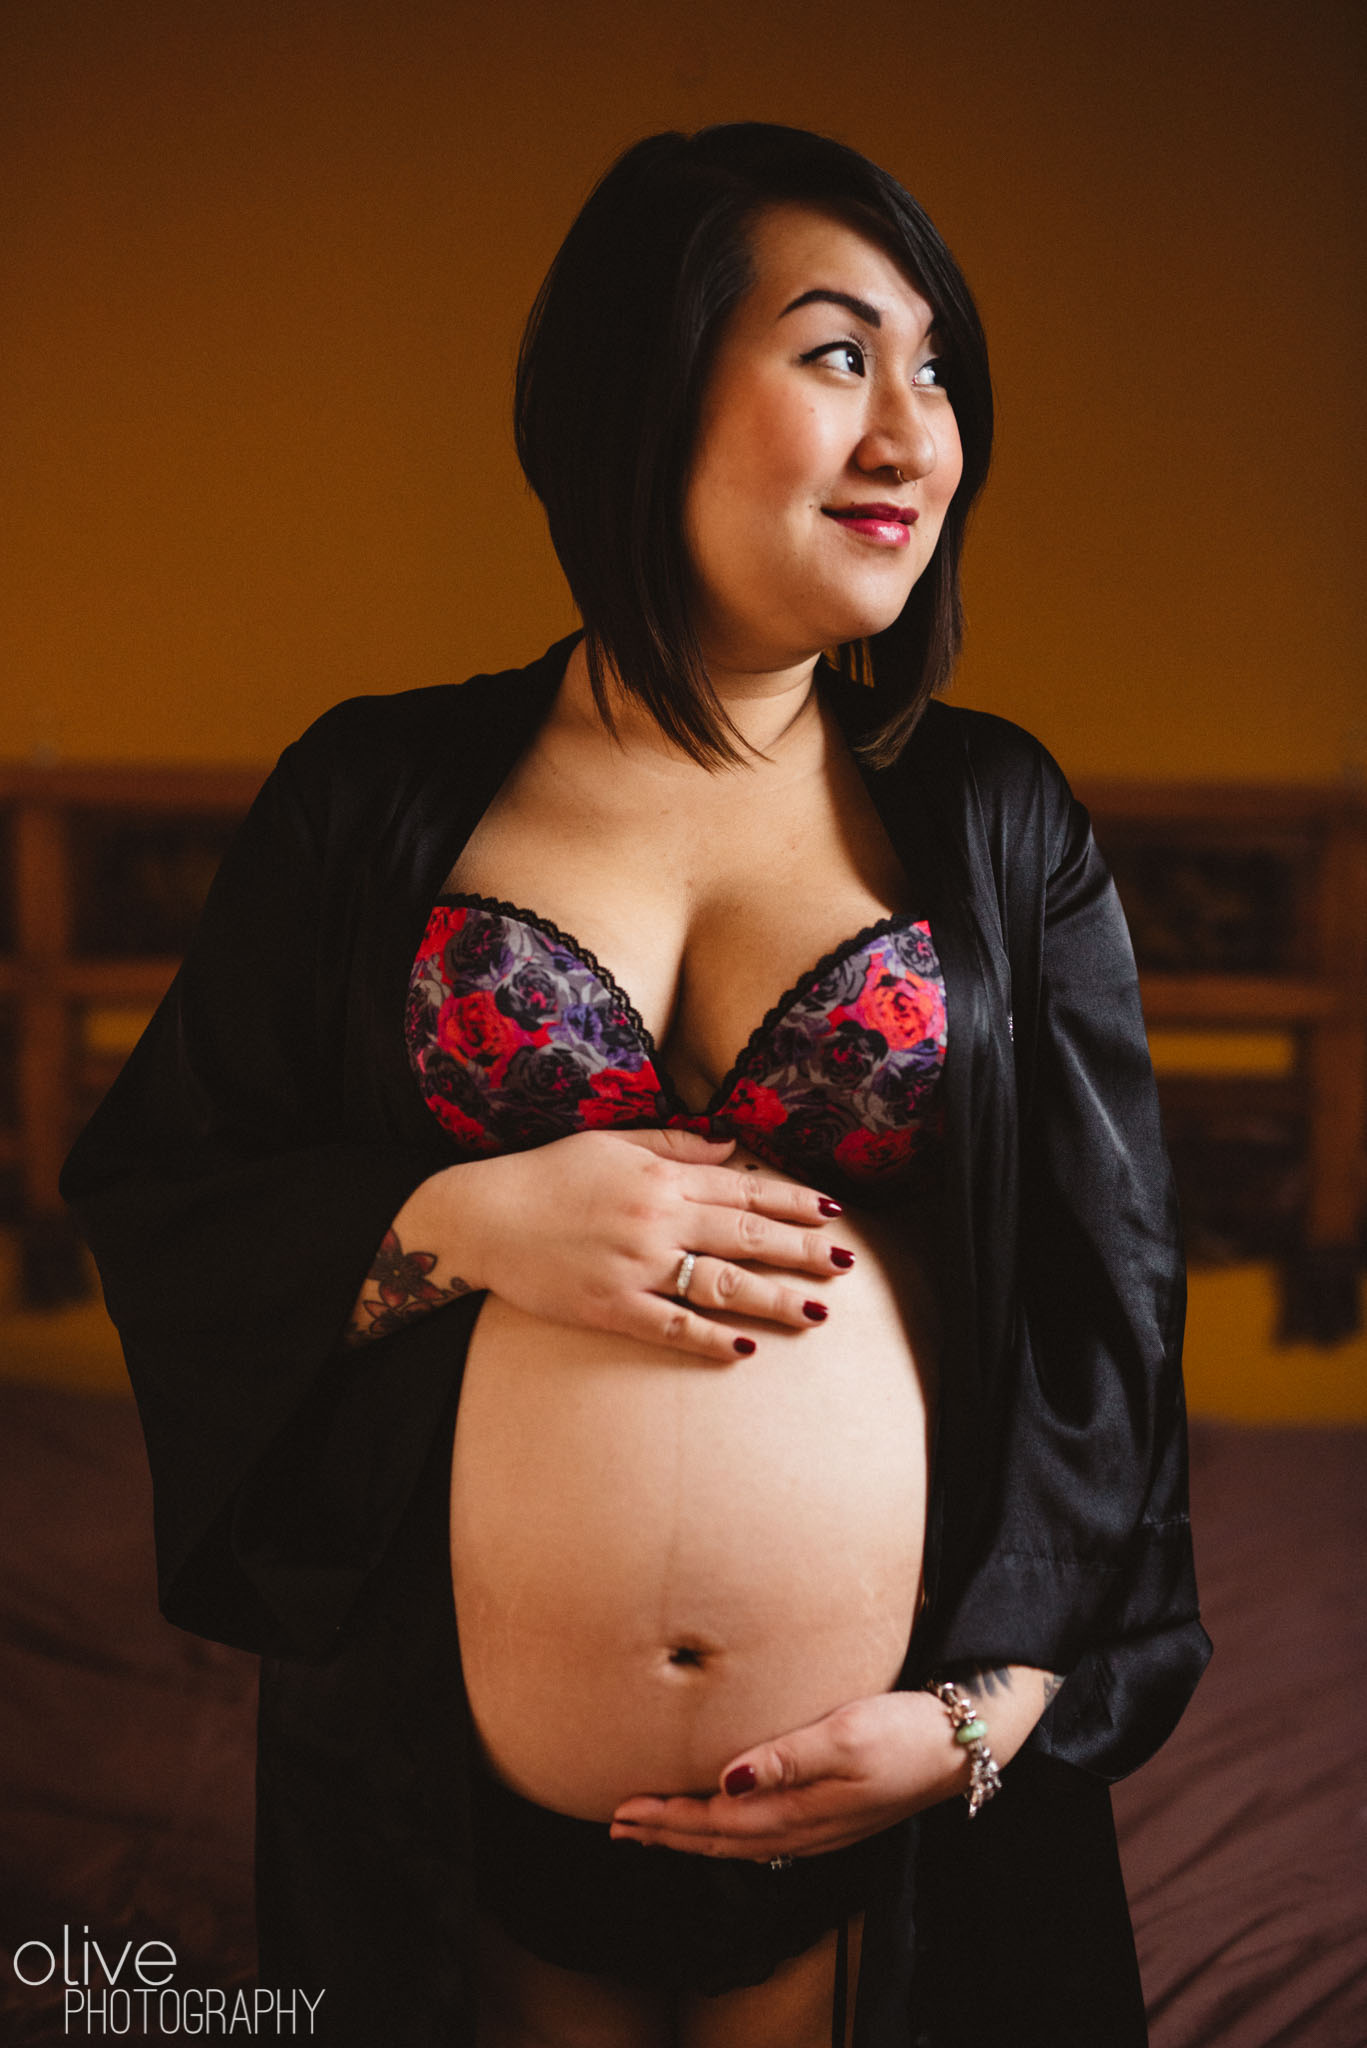 Maternity Photography Toronto - Olive Photography